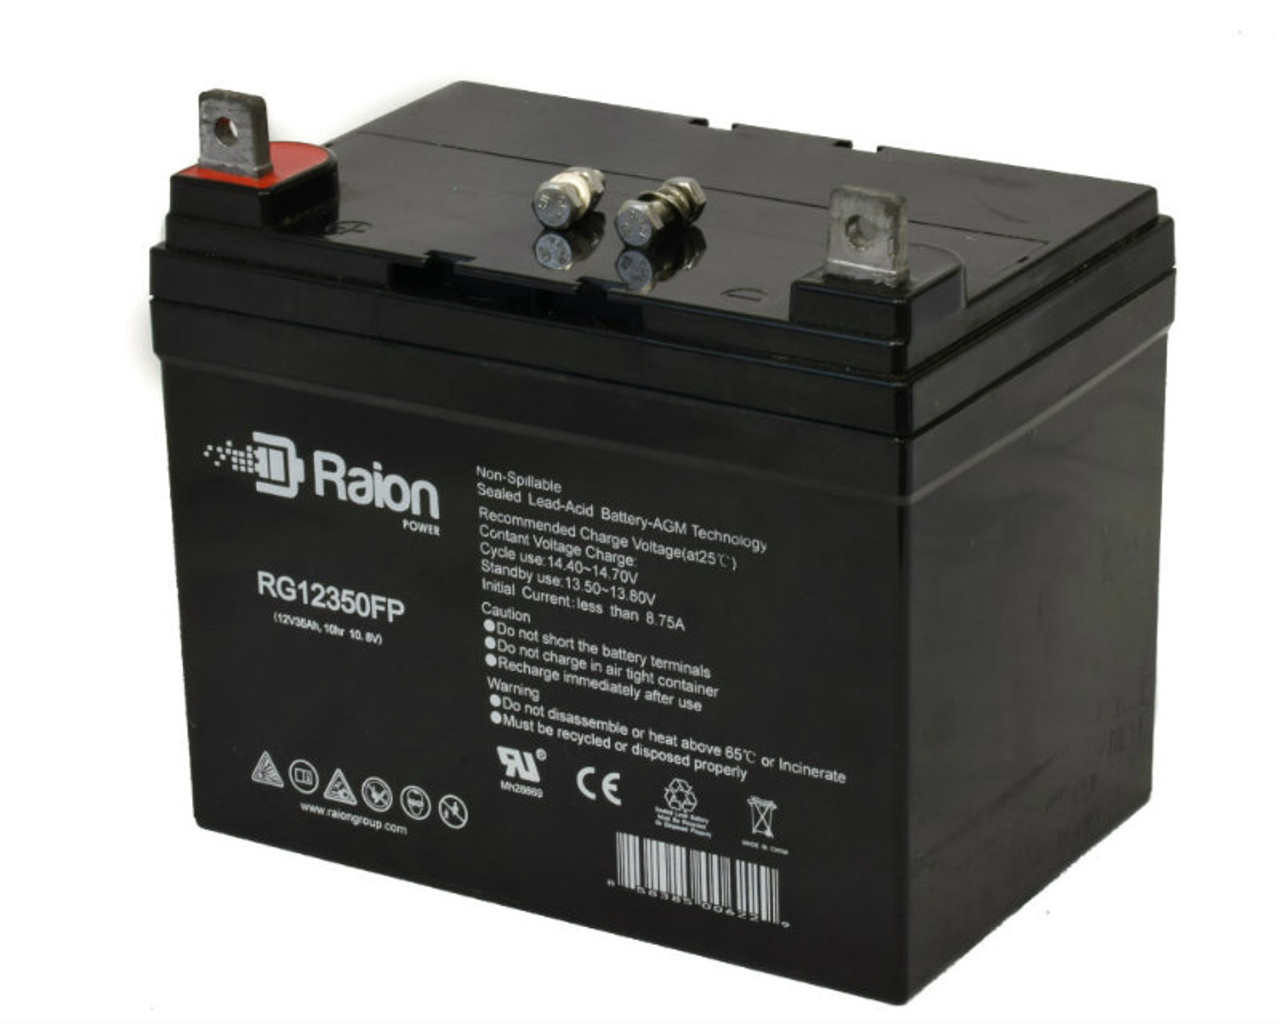 Raion Power Replacement 12V 35Ah Emergency Light Battery for IBT BT33-12GEL - 1 Pack